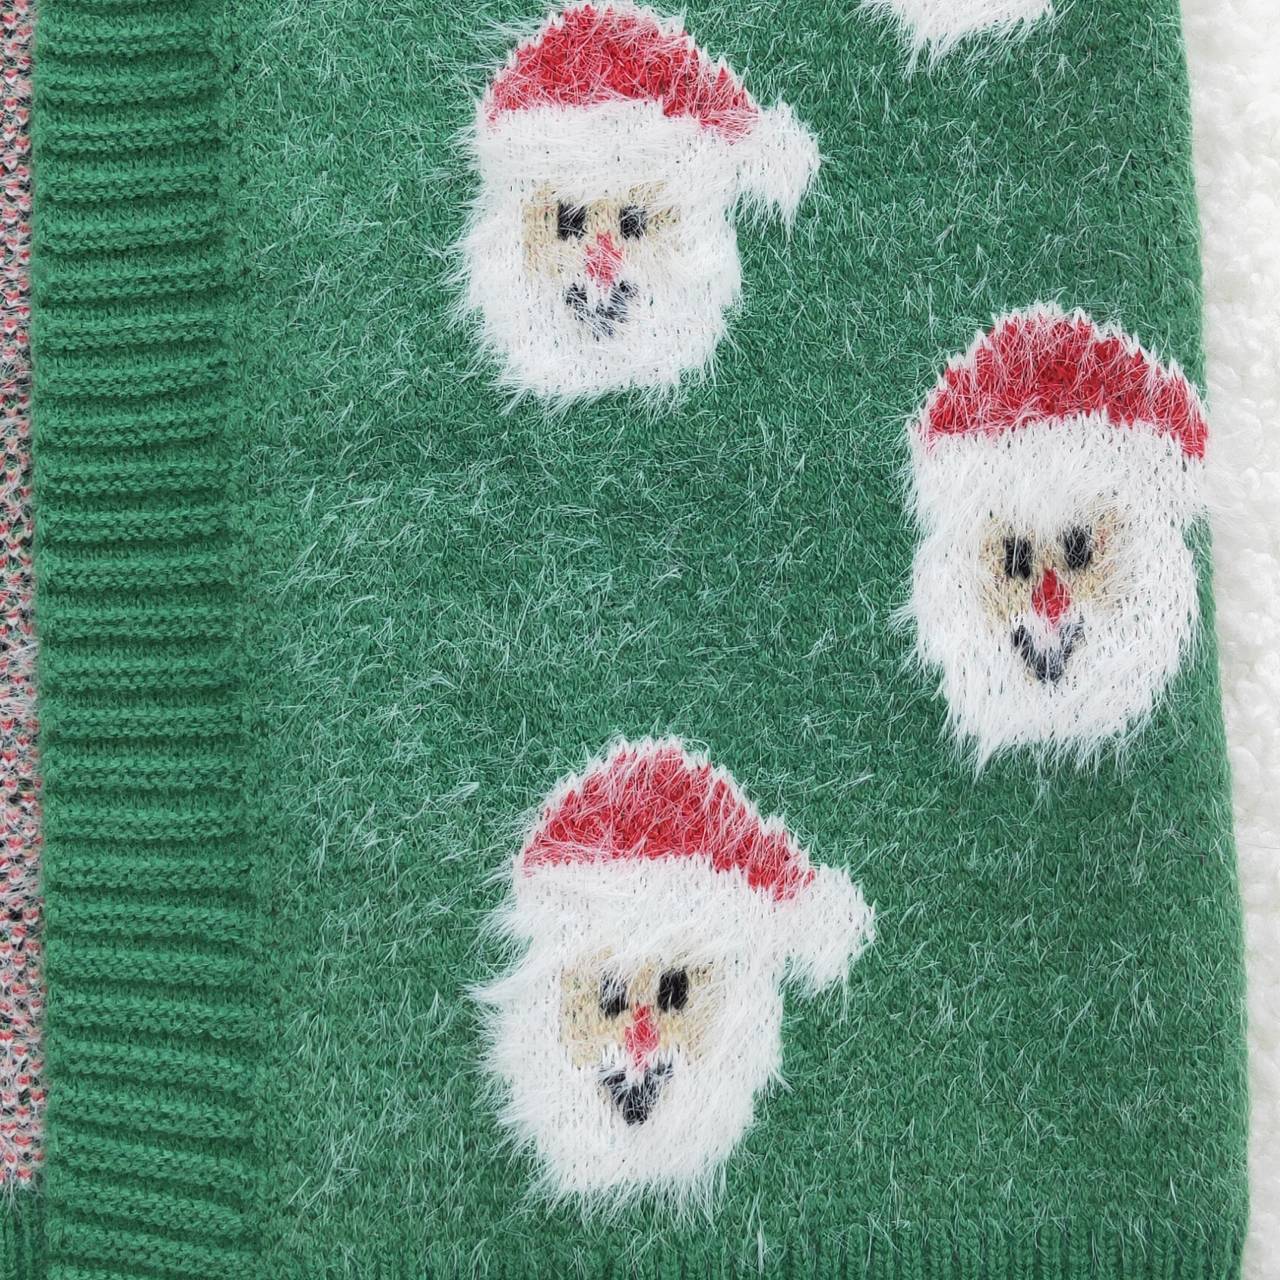 GT0357 Green Christmas Santa Baby Girls Sweater Cardigan